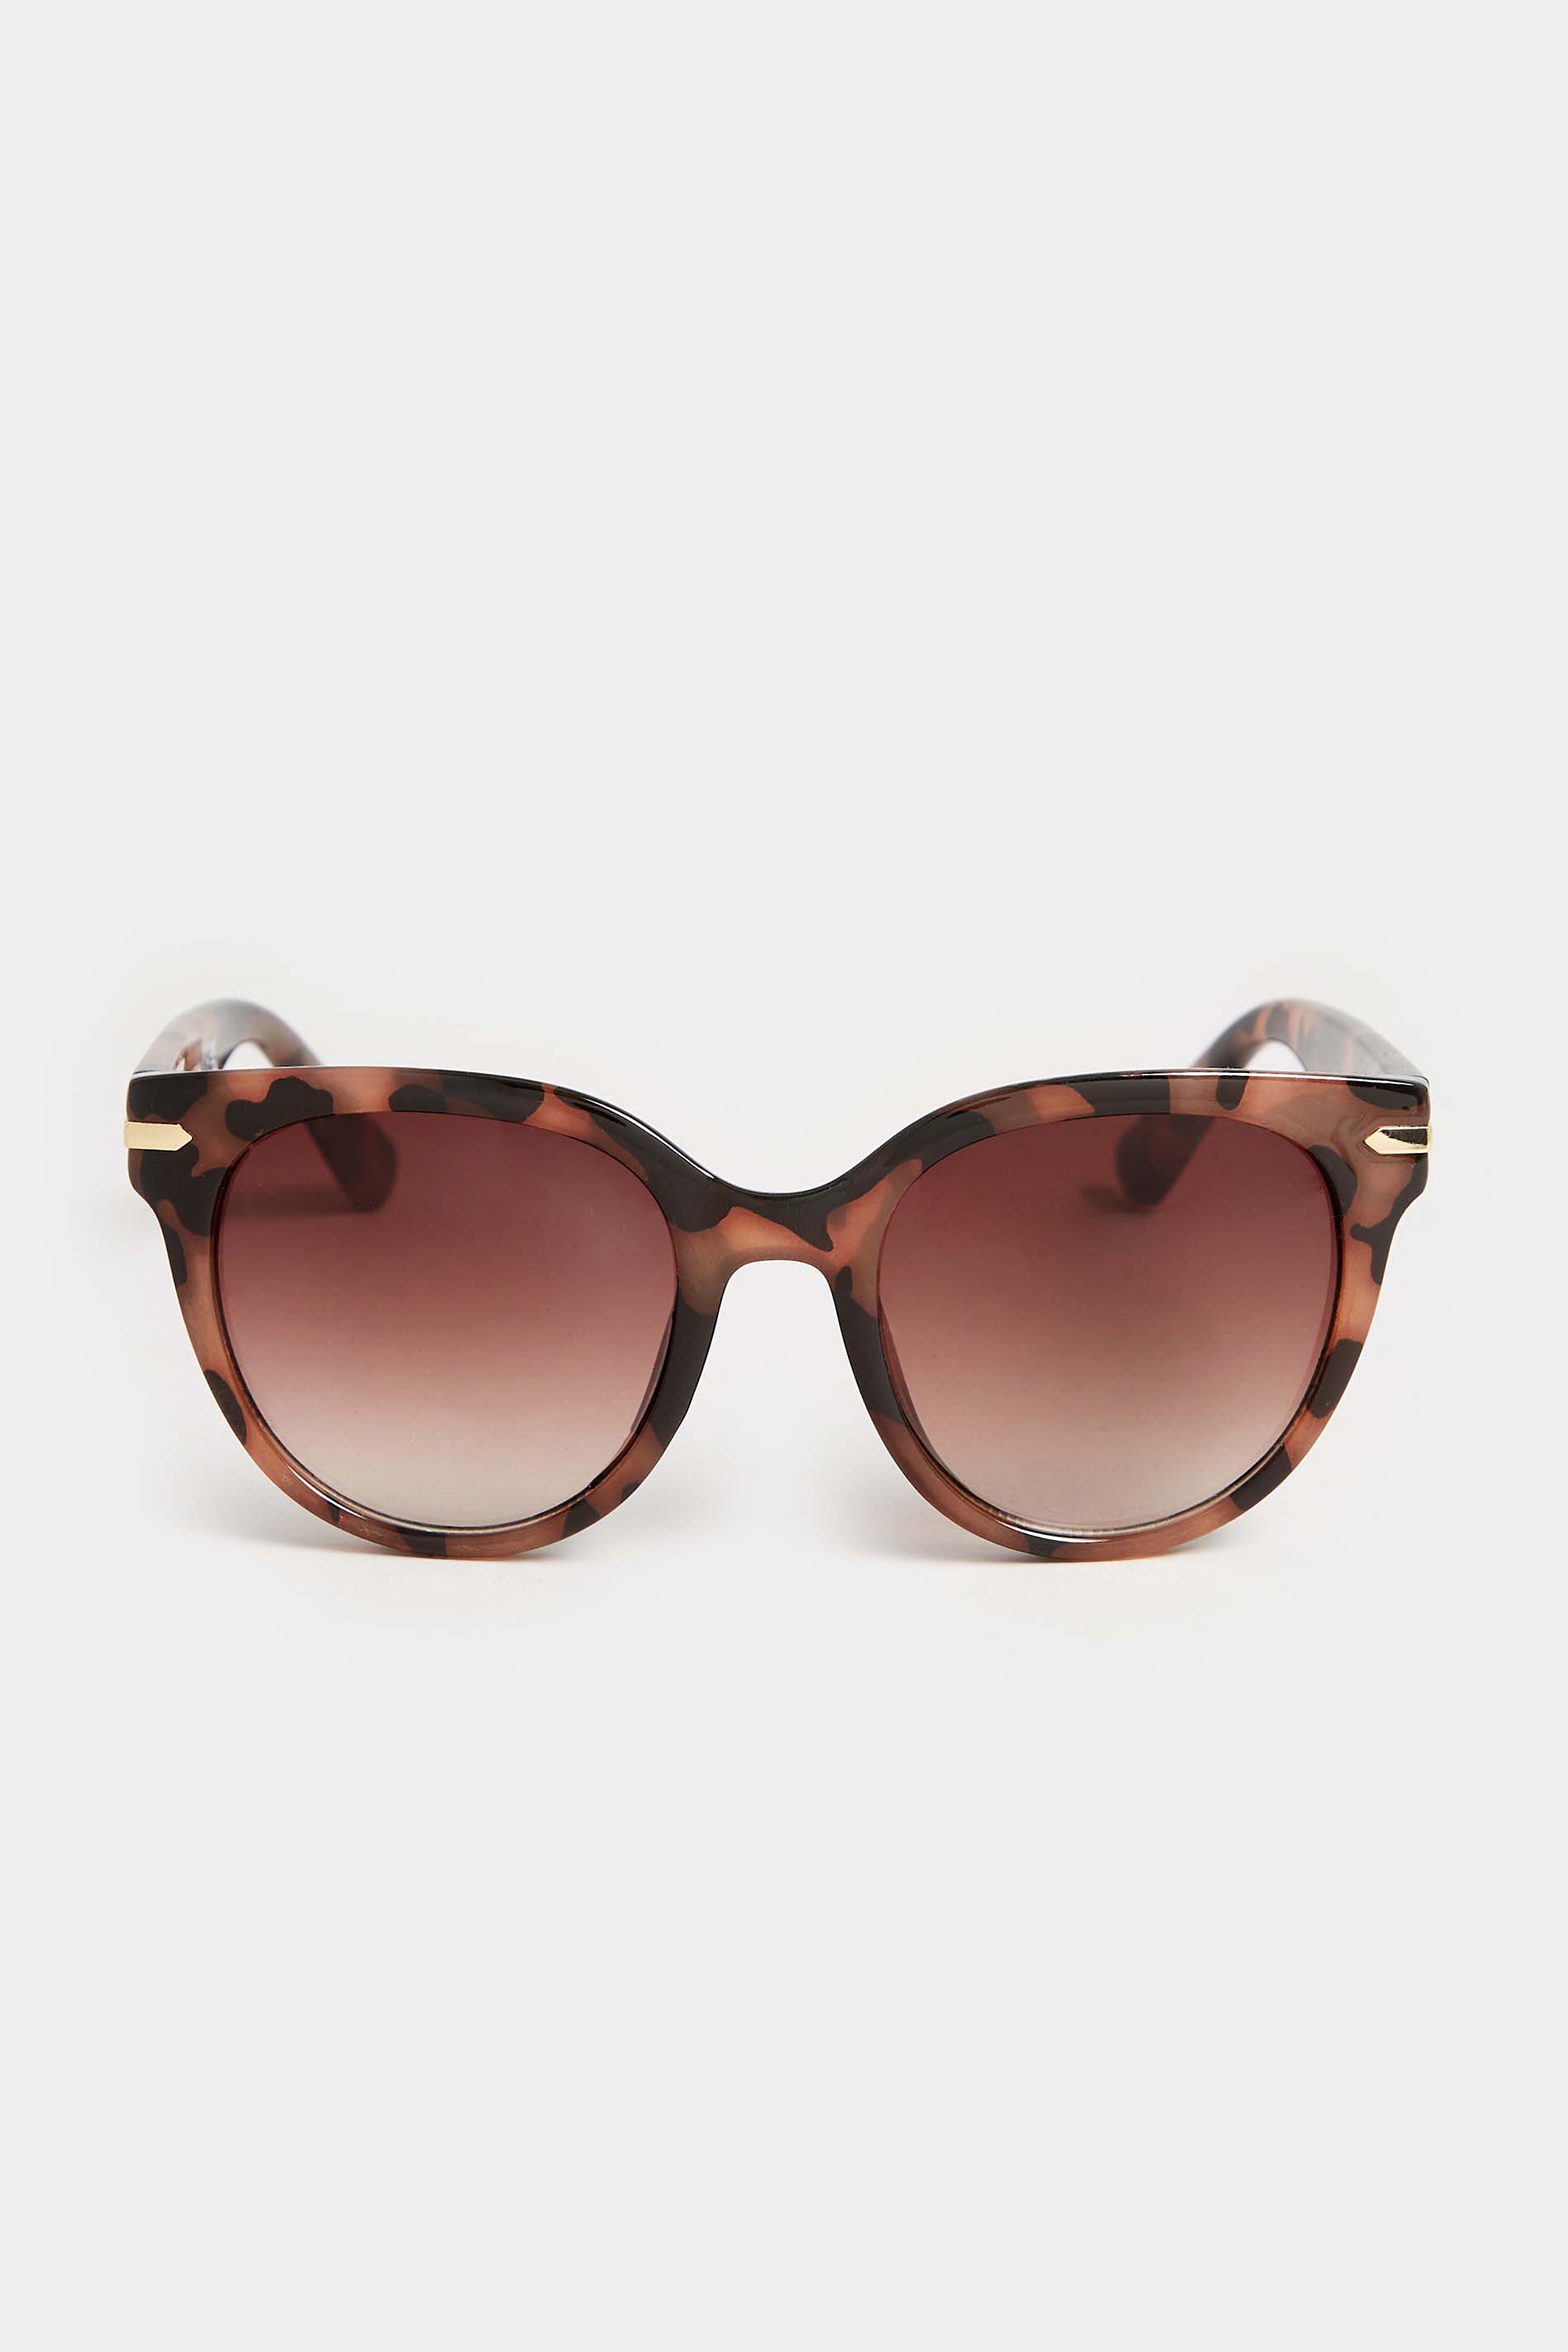 Brown Tortoiseshell Oversized Gold Detail Sunglasses | Yours Clothing 1